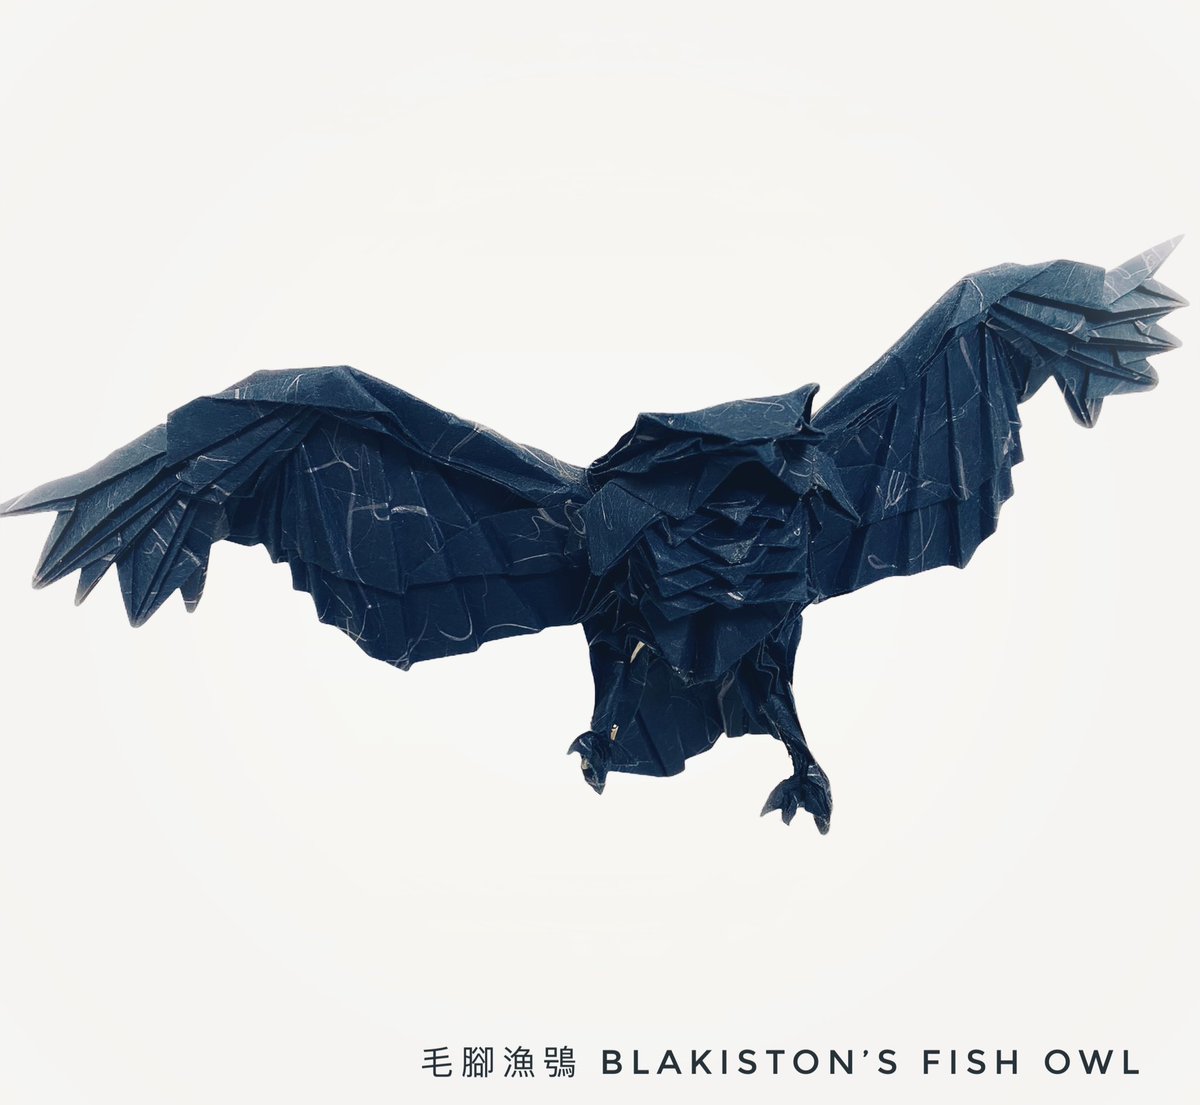 #blakistonsfishowl 
Blakiston’s Fish Owl 🦉 Kyohei Katsuta 
Uncut Squared Paper 50cm x 50cm 雲龍和紙

#origami #摺紙 #摺紙藝術 #折り紙 #折り紙アート #折り紙リース #折り紙作品 #origamichallenge #origamicharacter #origamipeople #origamianimal #katsutakyohei #kyoheikatsuta